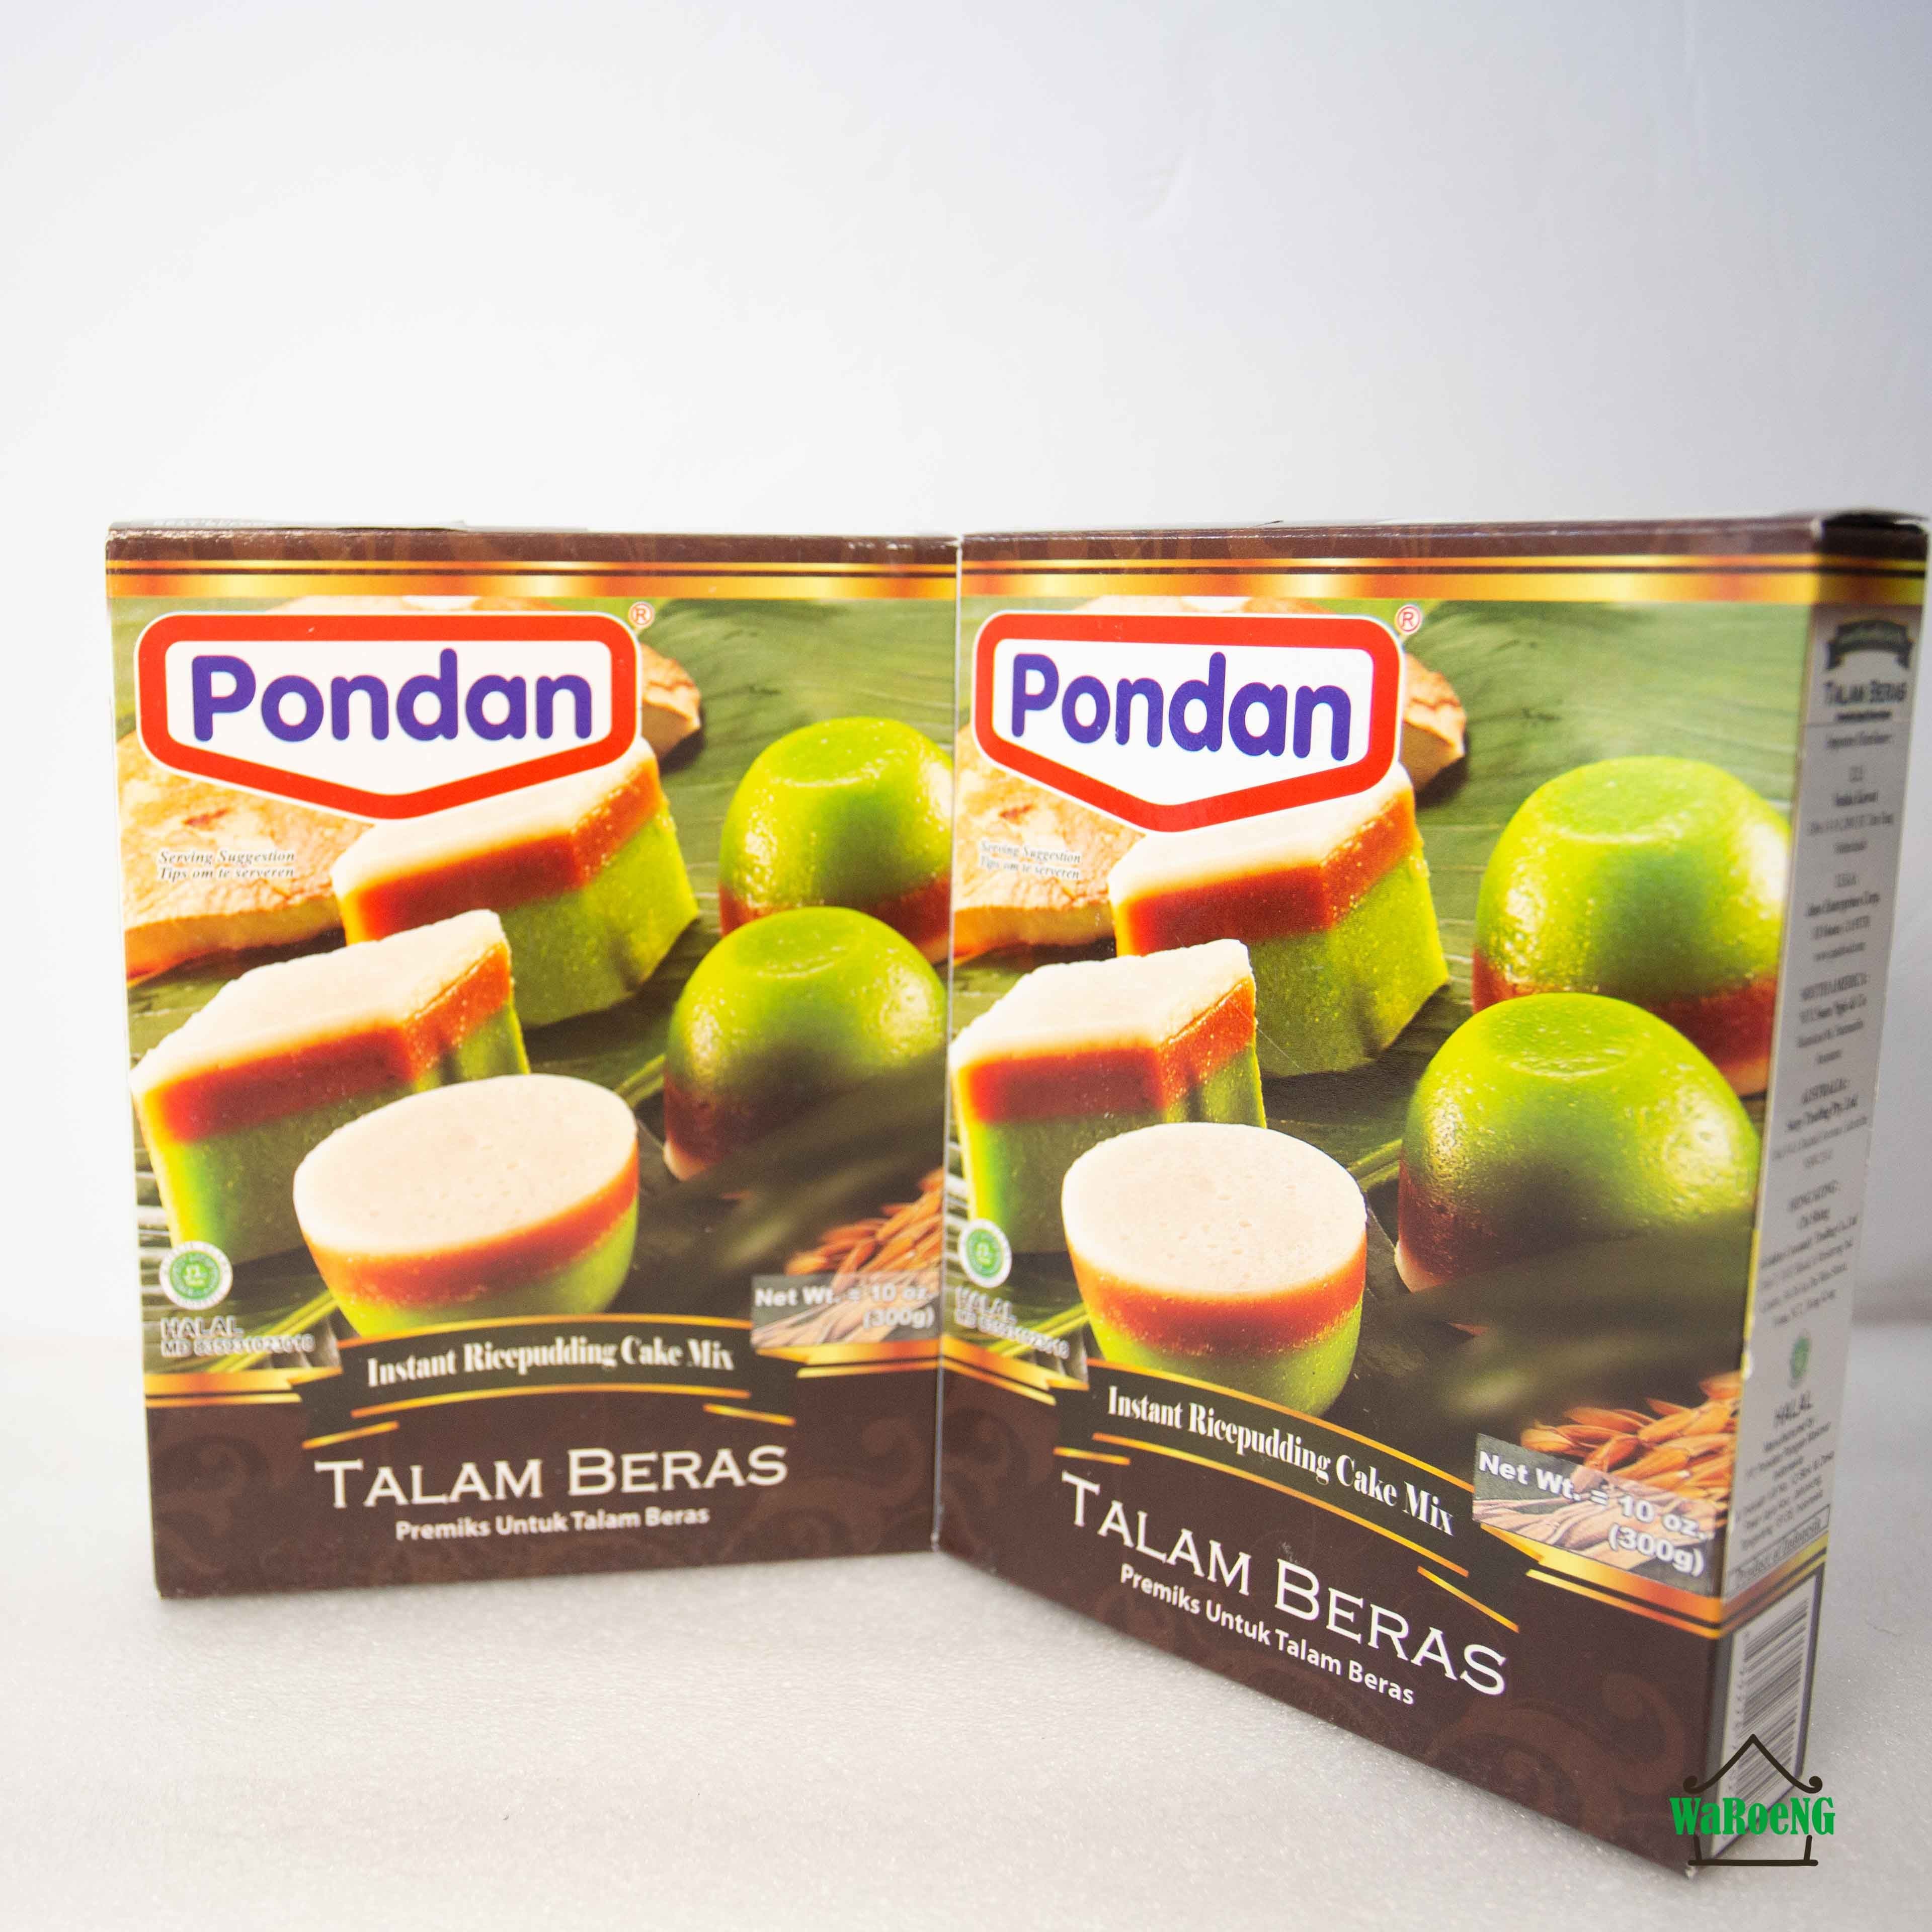 Pondan Talam Beras (Instant Rice Pudding Cake Mix)